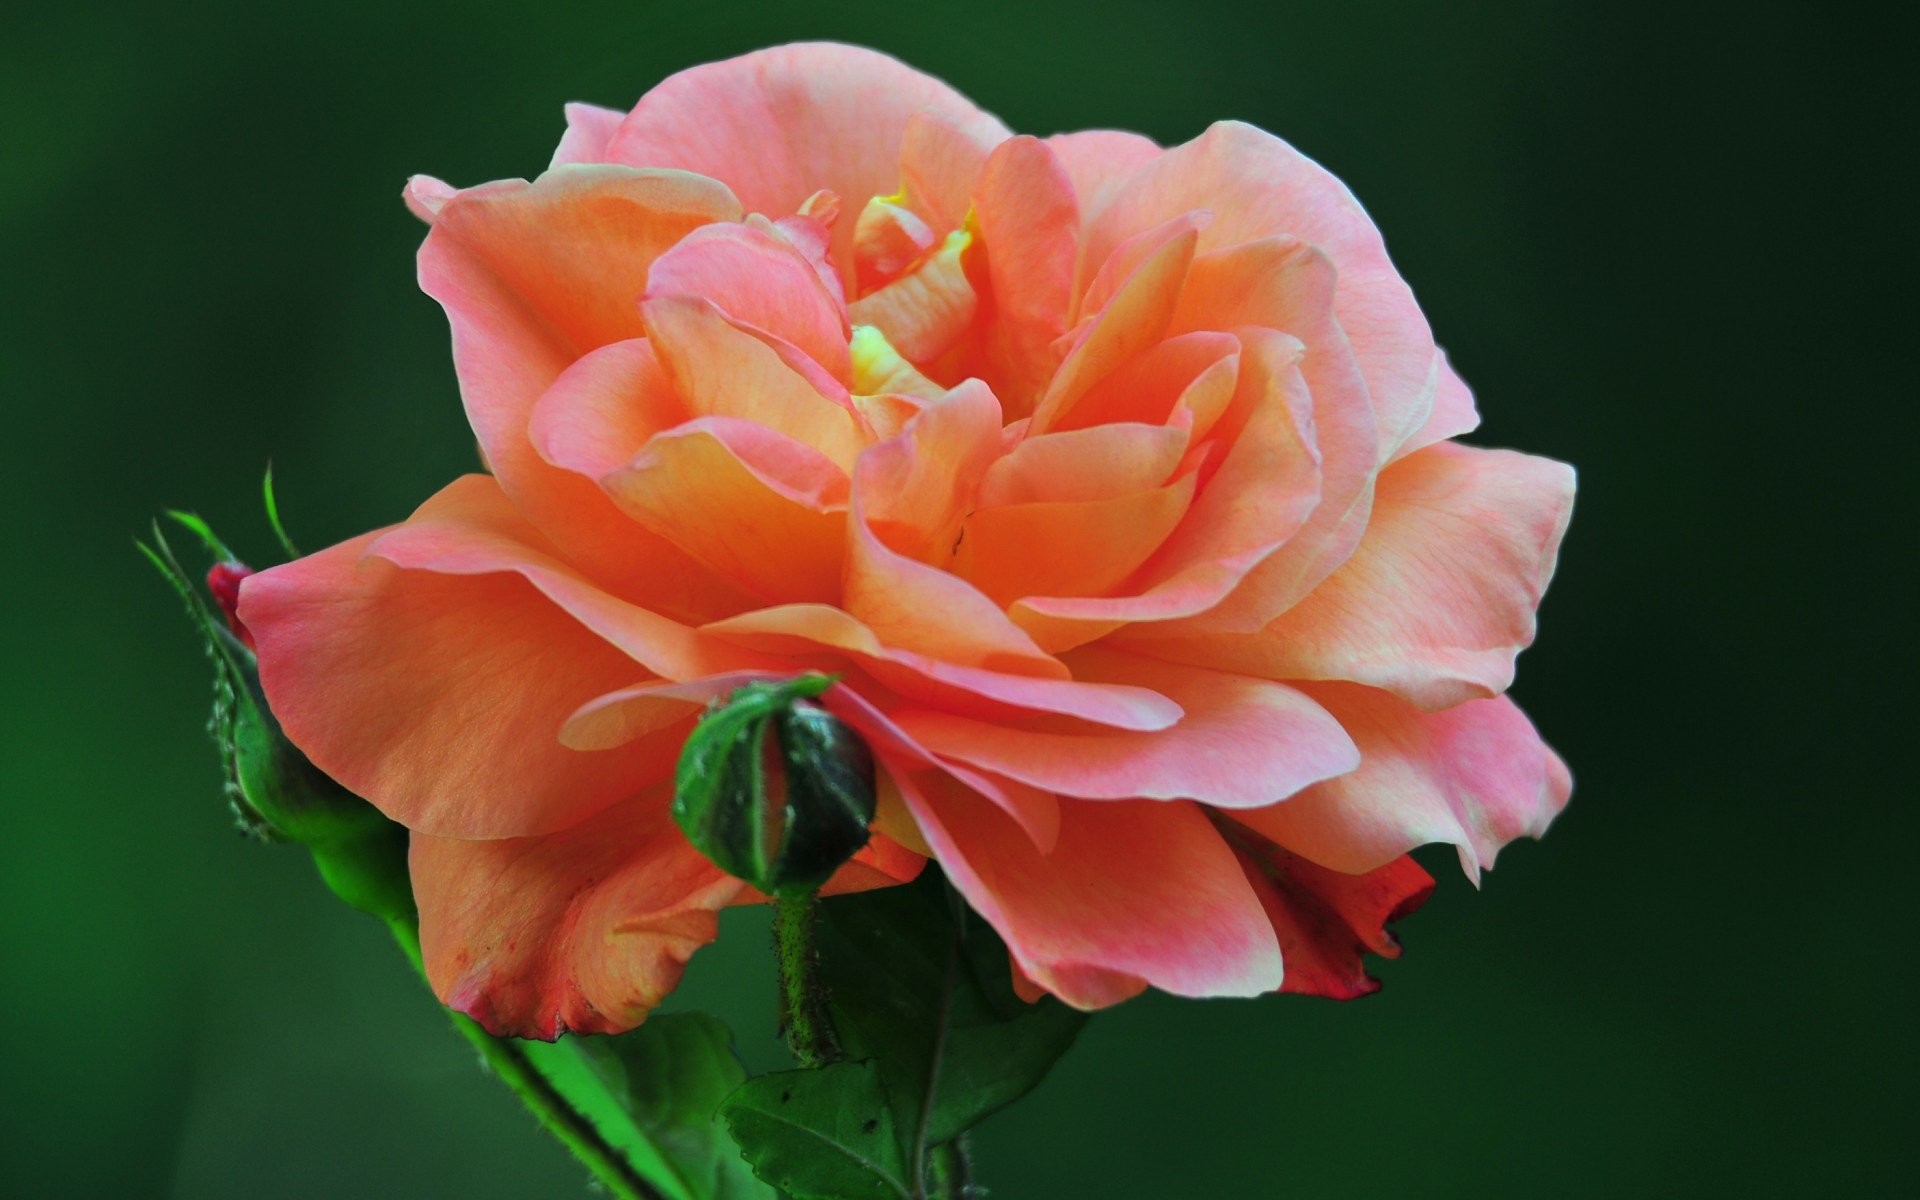 belle immagini di rose per carta da parati,fiore,pianta fiorita,julia child rose,petalo,rose da giardino